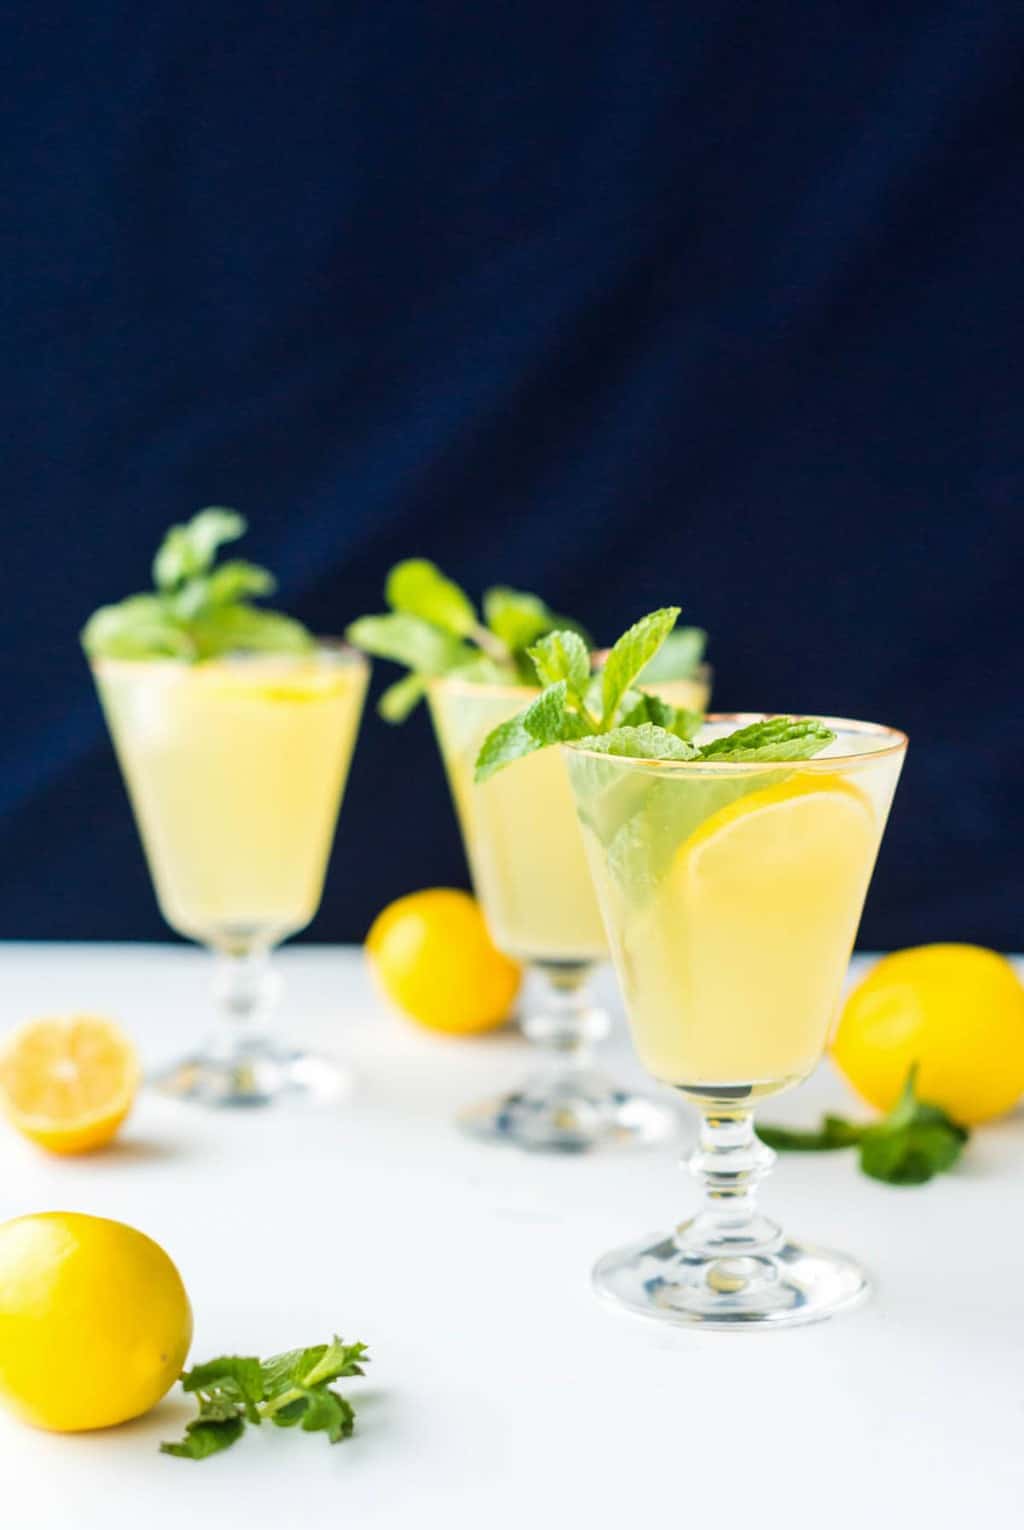 Sparkling Mint Meyer Lemonade by Sugar & Cloth, an award winning DIY and recipe blog.